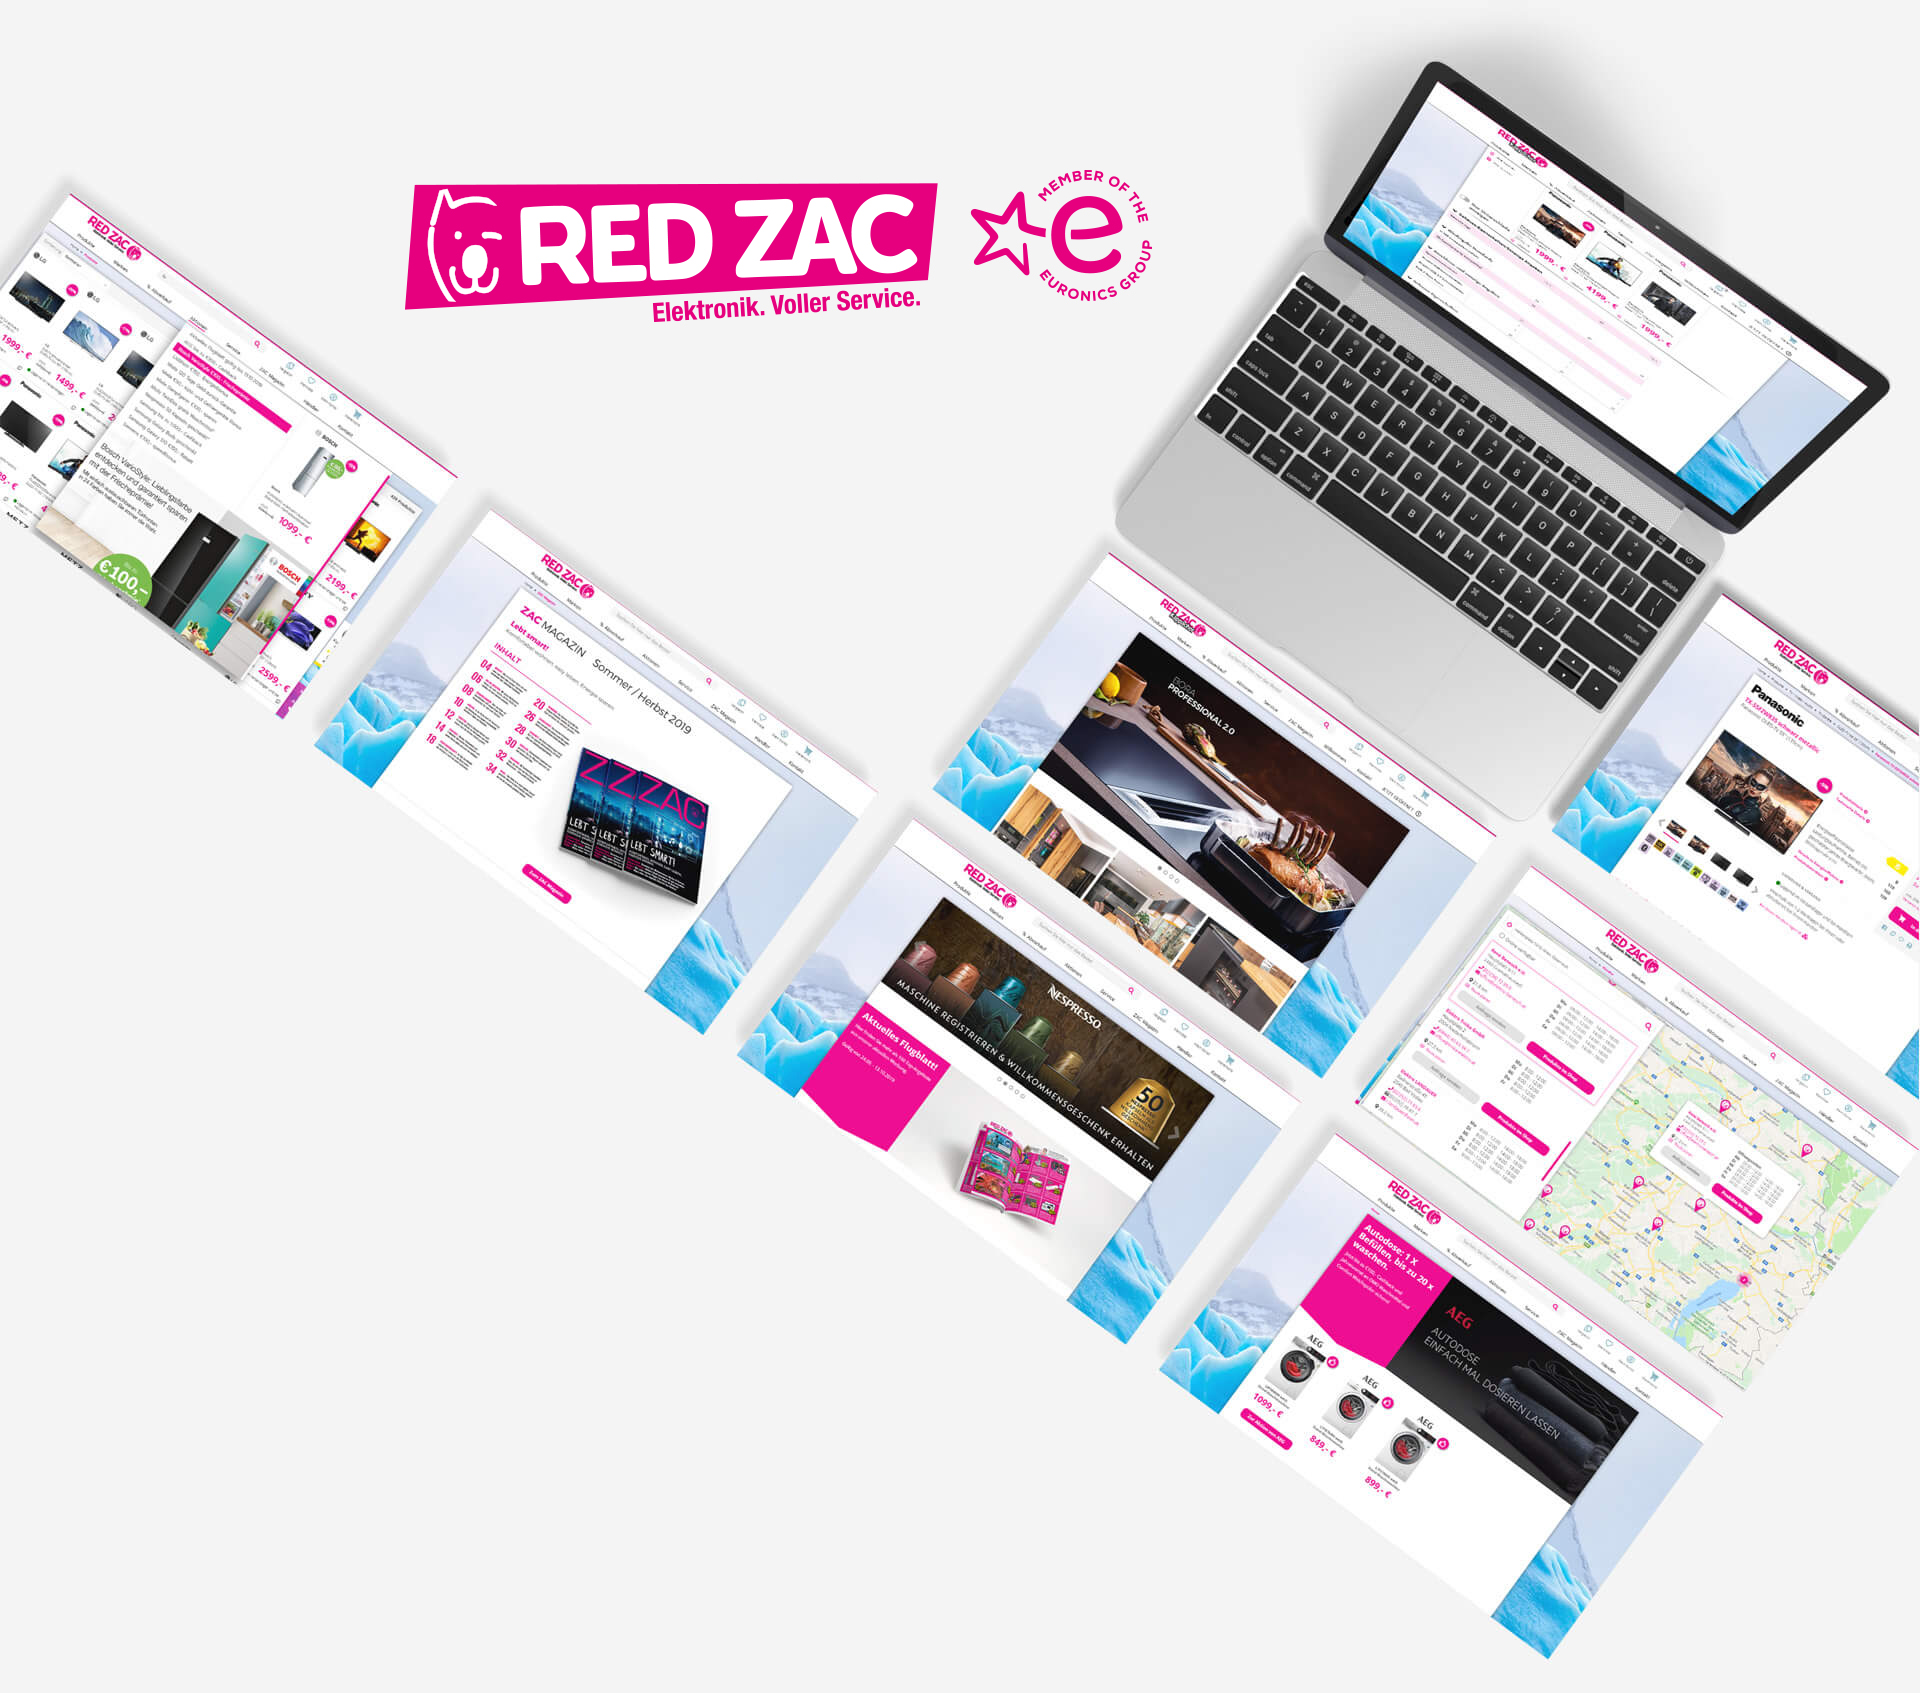 RED ZAC e Business Plattform Screens Laptop